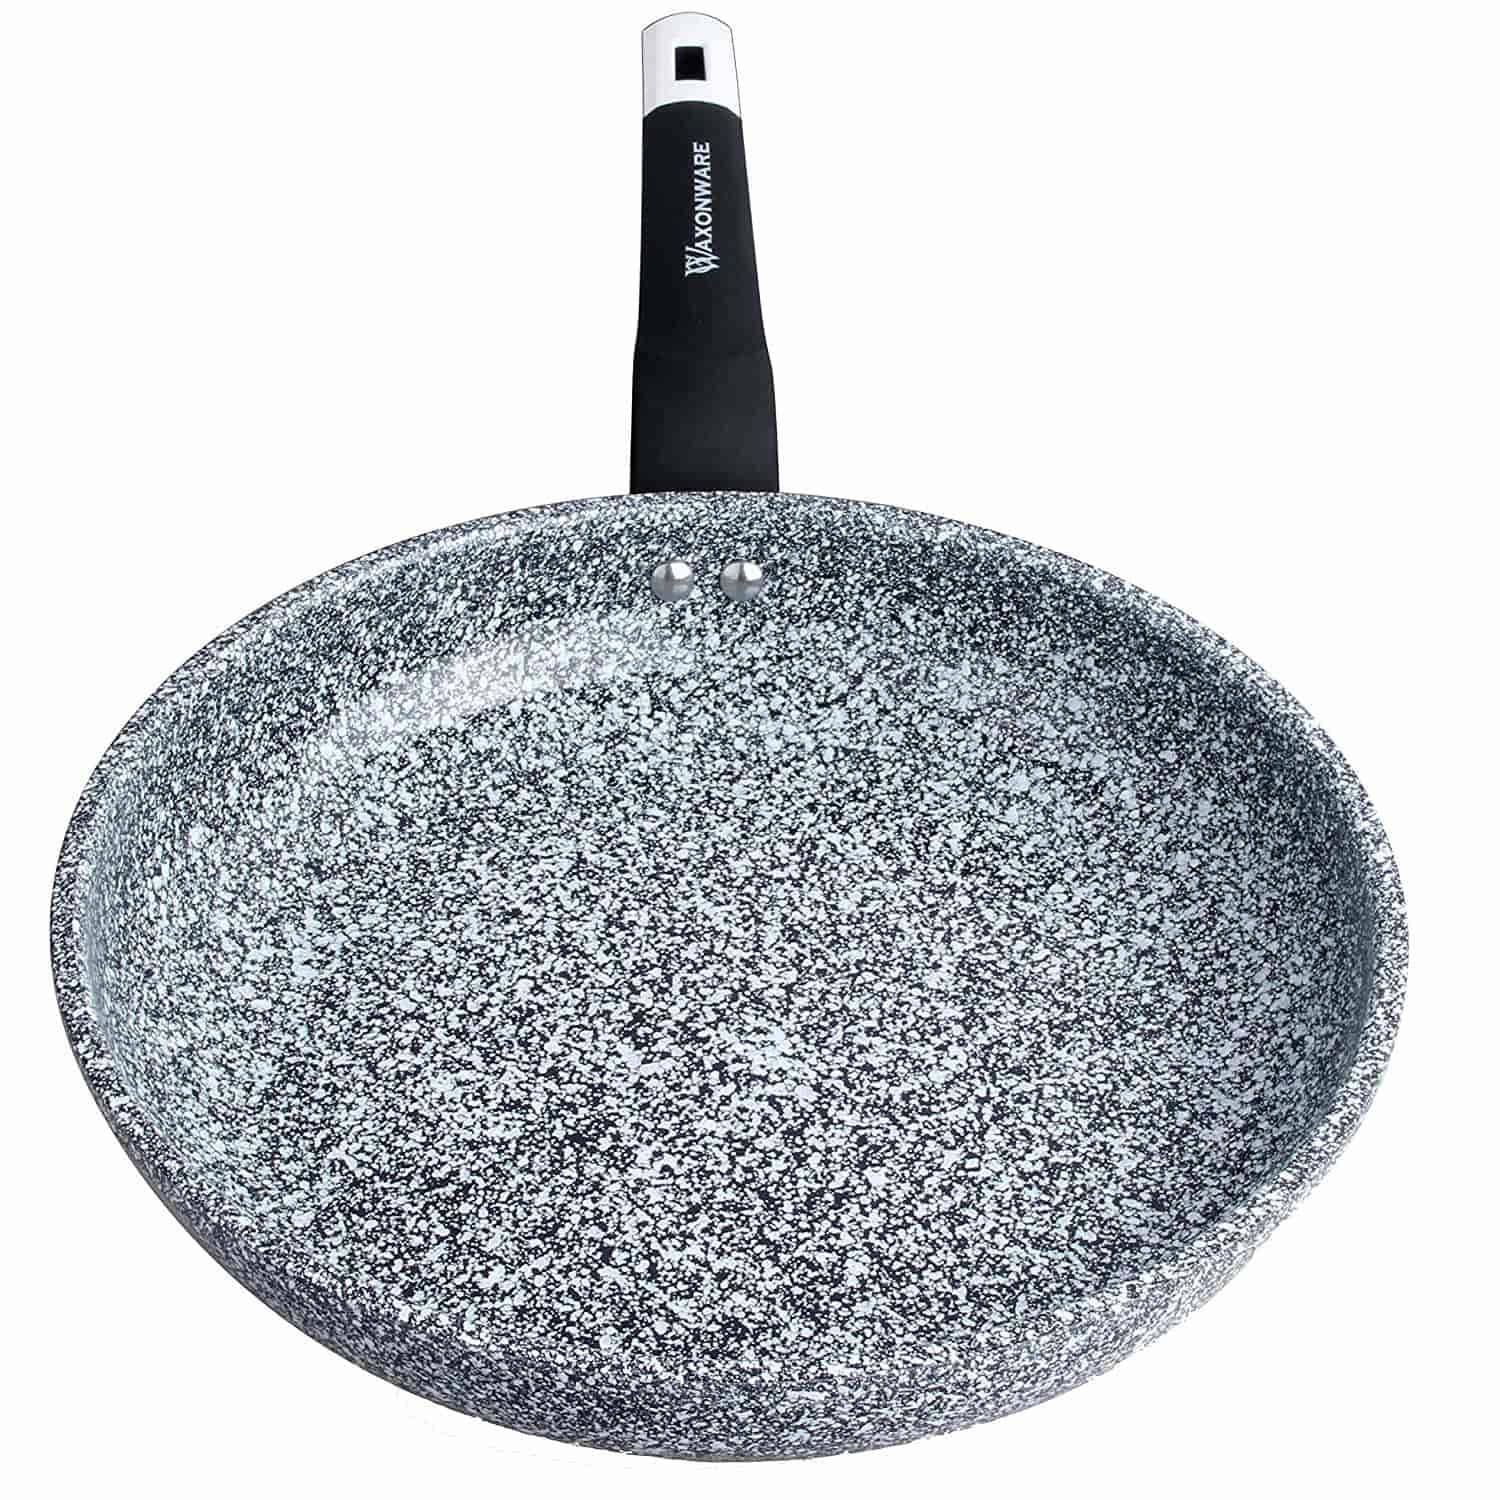 WaxonWare Granite Ceramic Nonstick Frying Pan Nonstick Skillet 